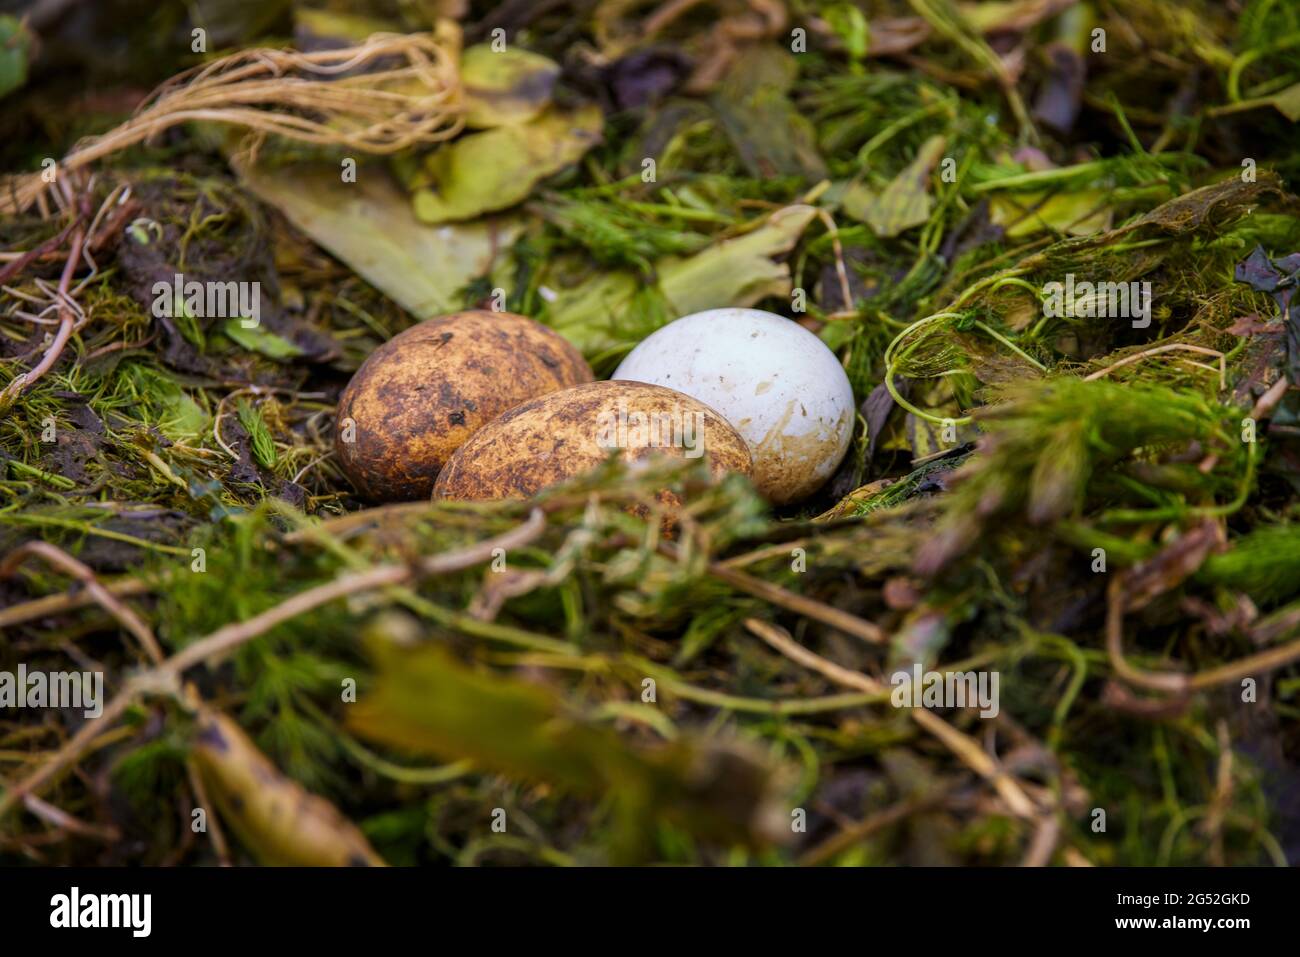 nest with eggs of some birds (stern hirundo) on vegetation in the Danube Delta. Stock Photo